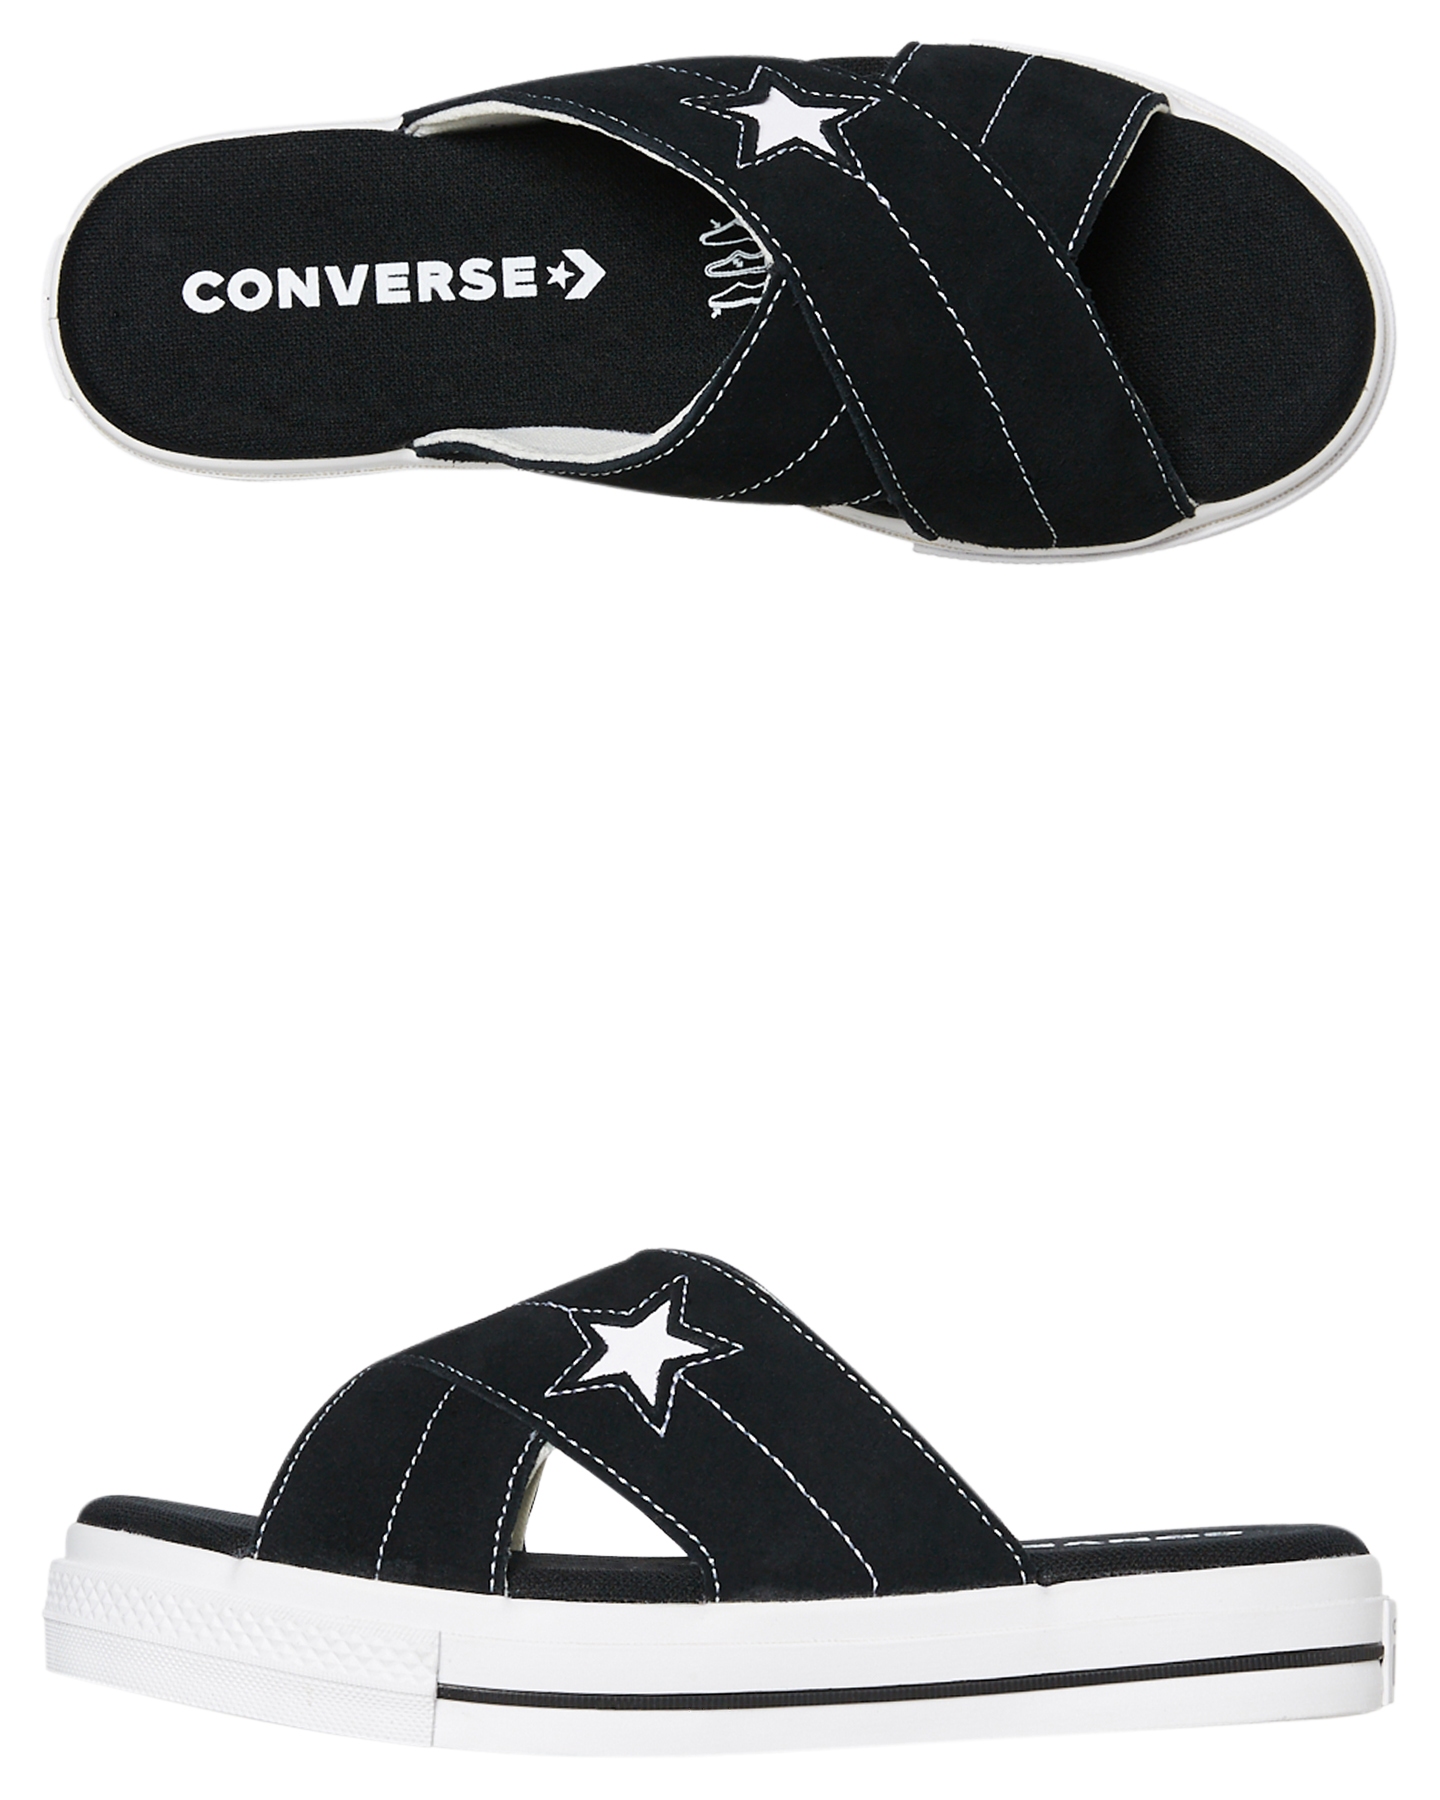 converse one star slides